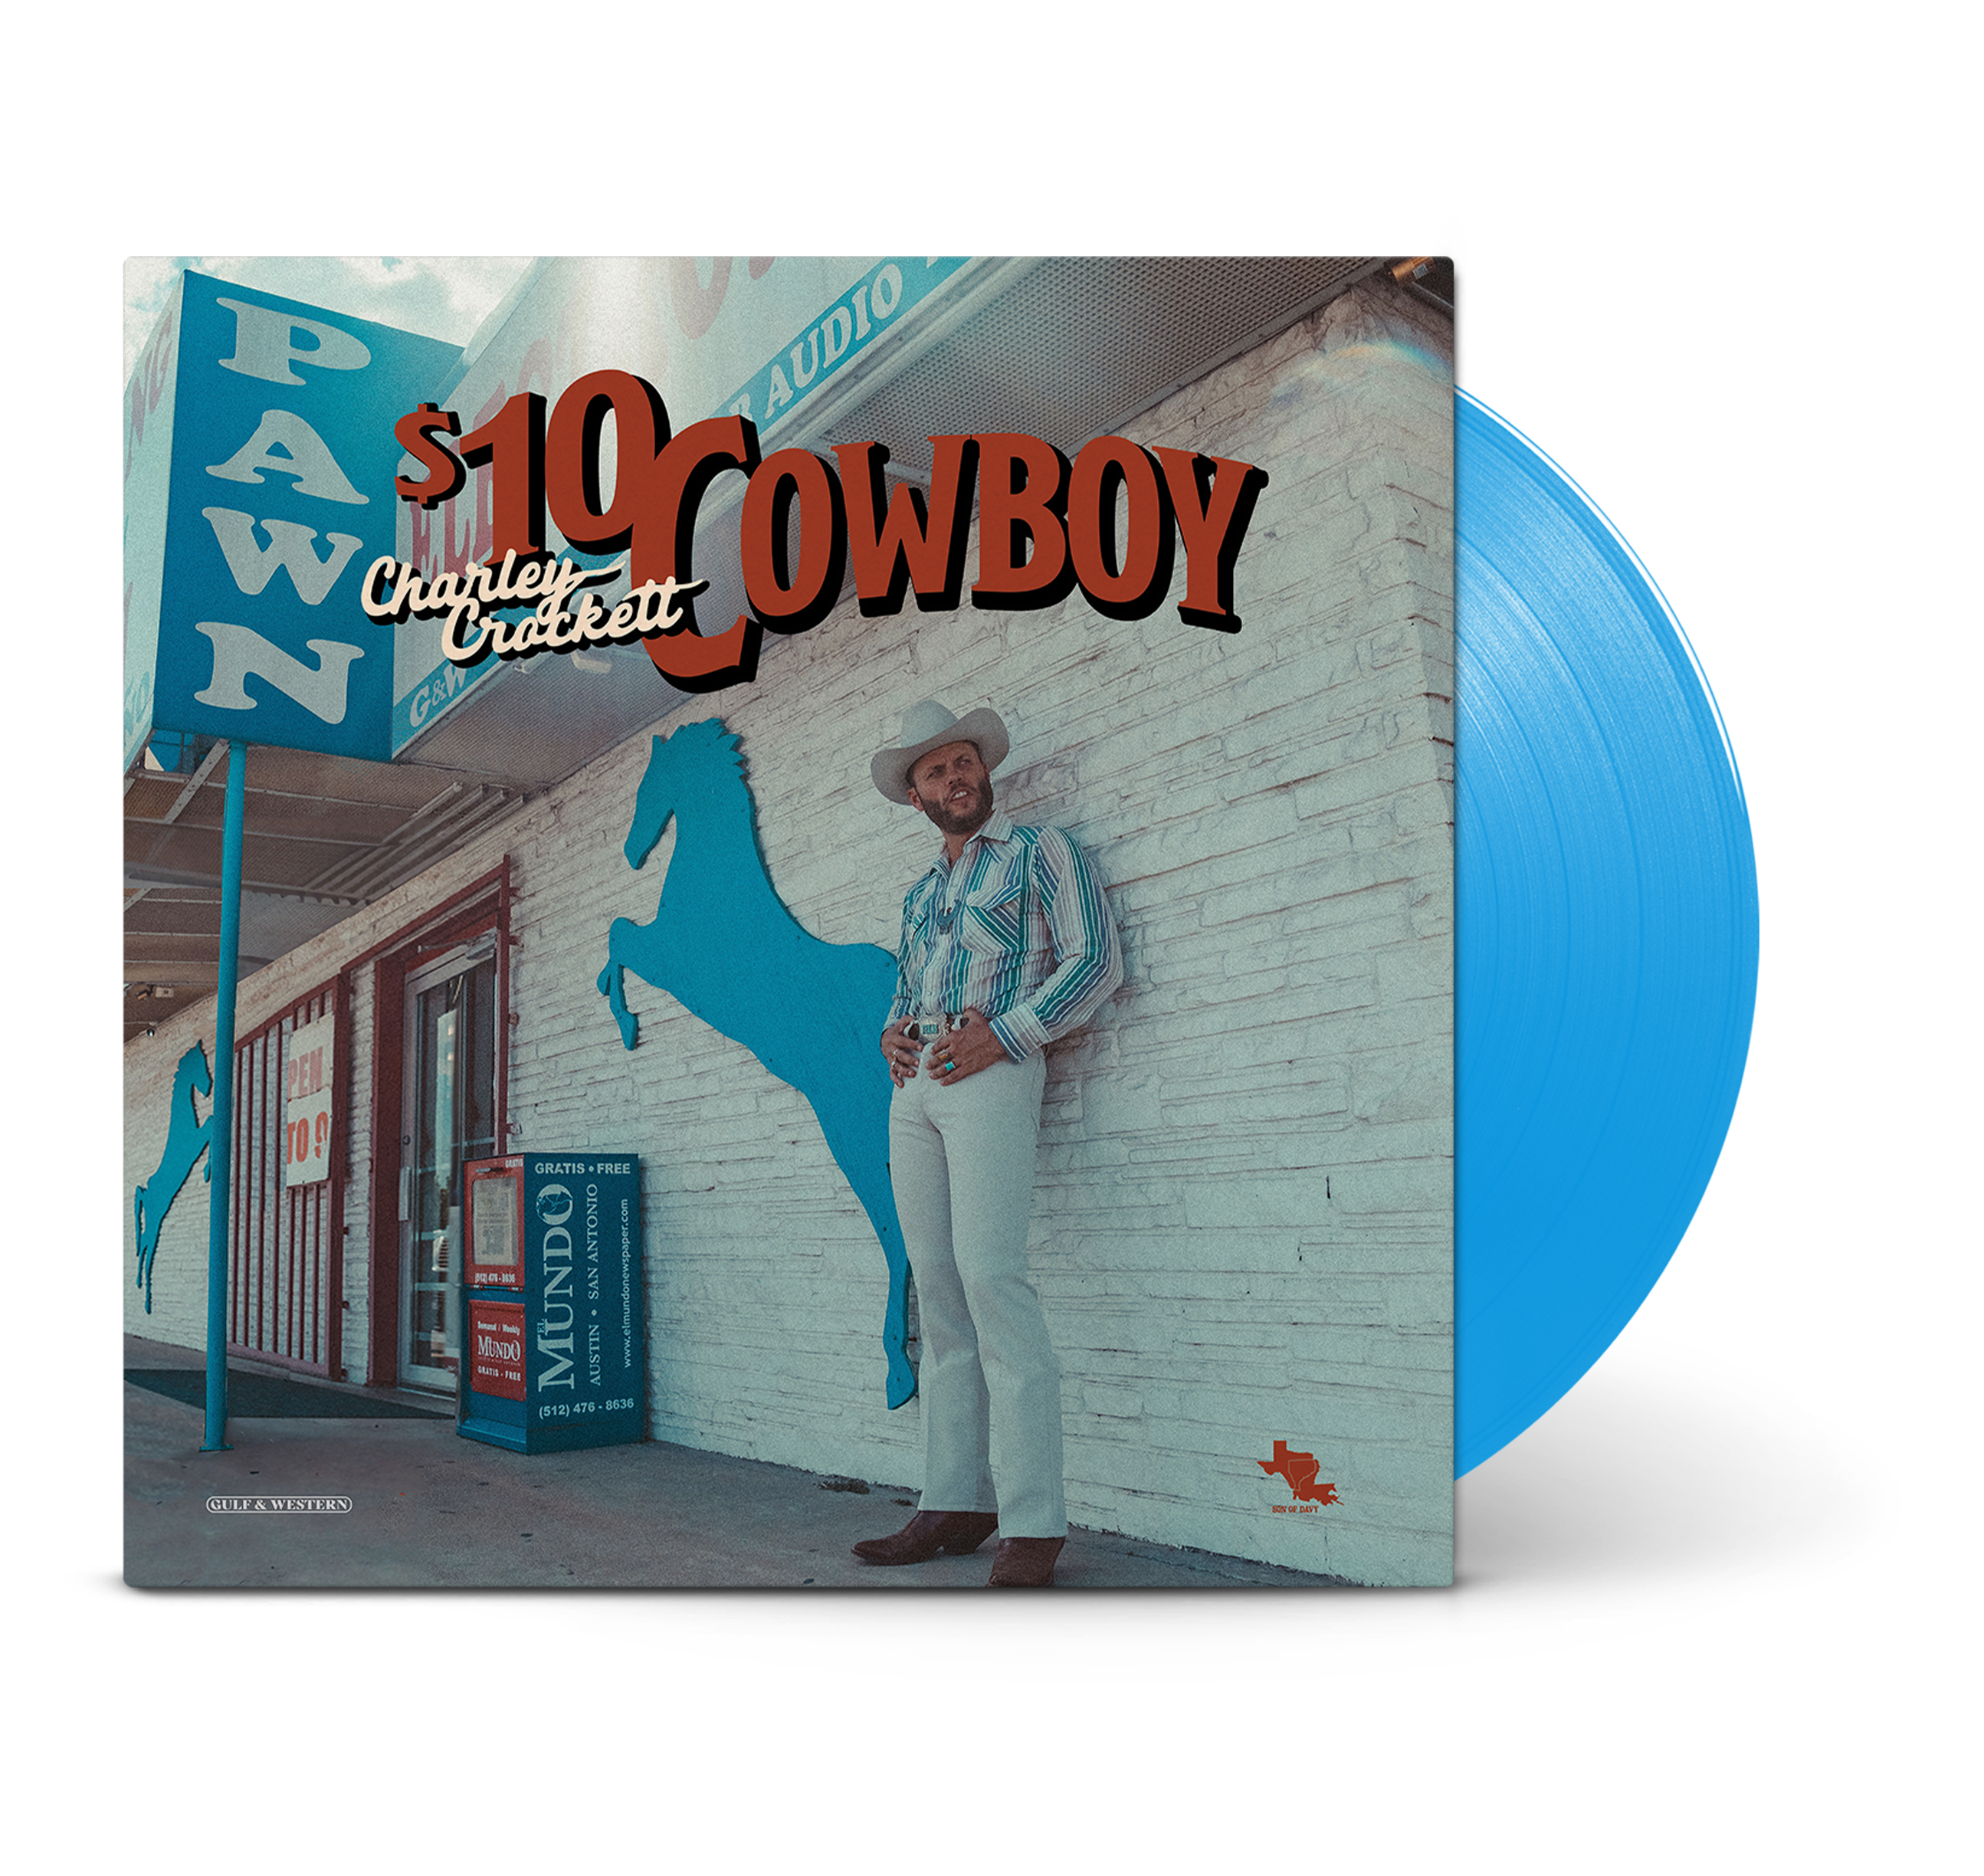 Charley Crockett- $10 Cowboy (Indie Exclusive) (DAMAGED)